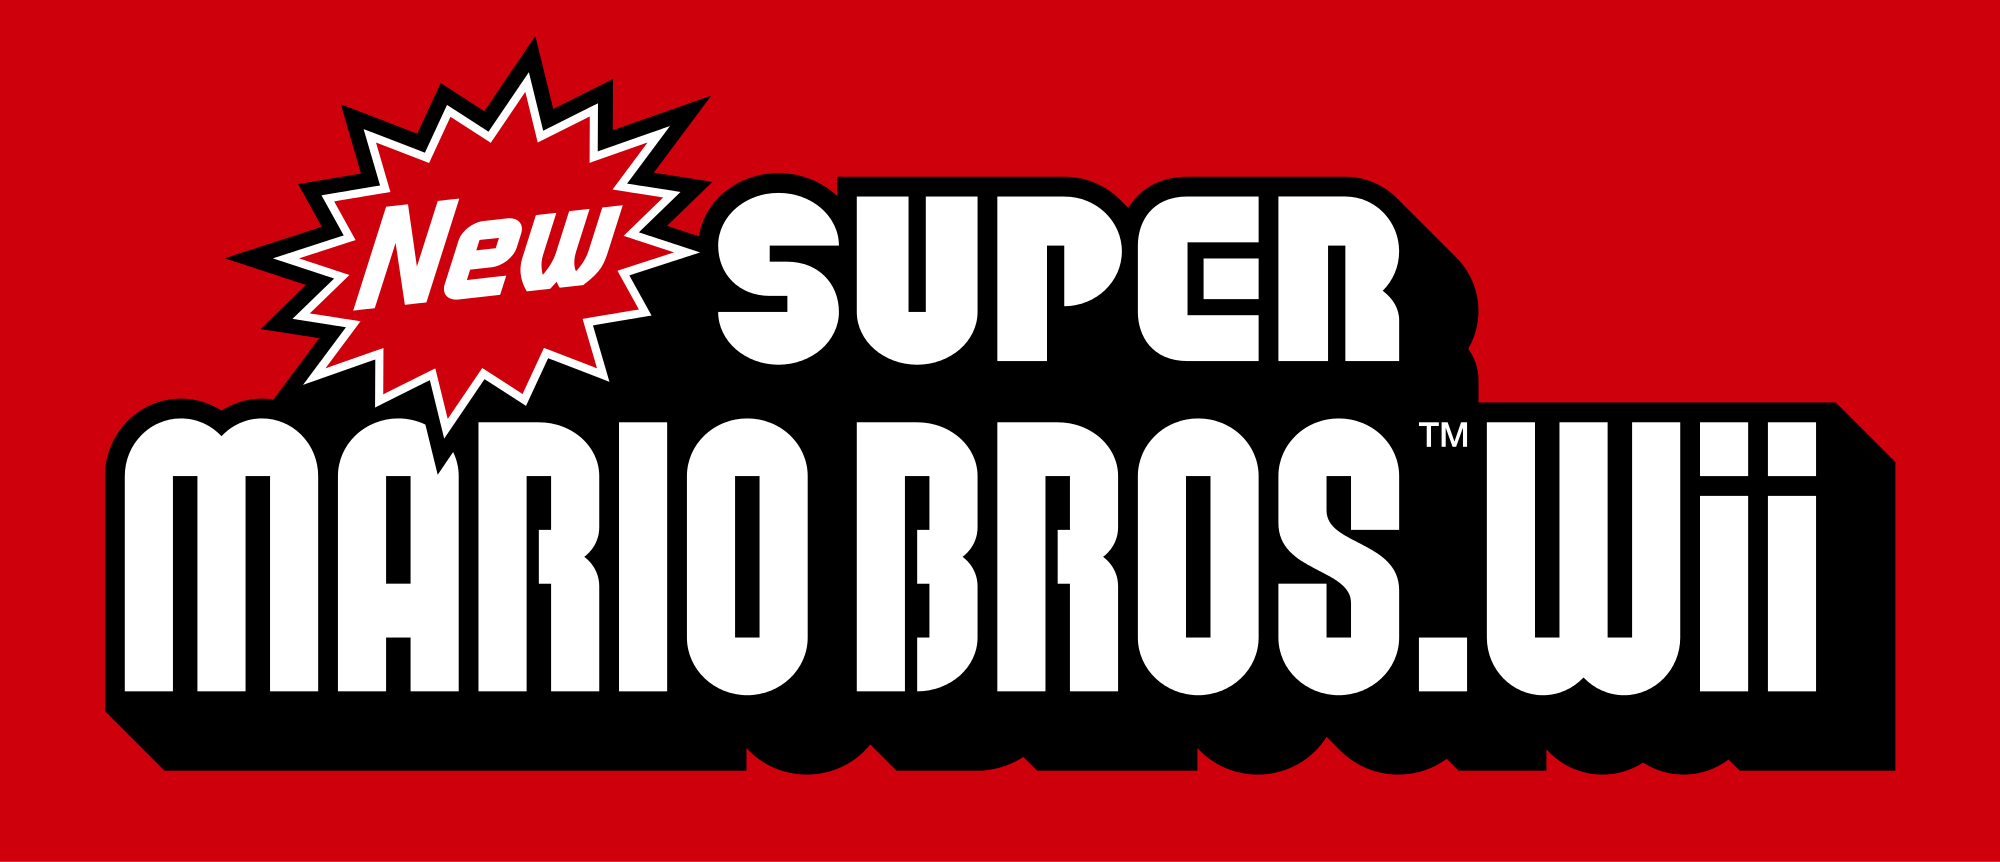 New Super Mario Bros. Logo - New Super Mario Bros. Wii logo.svg